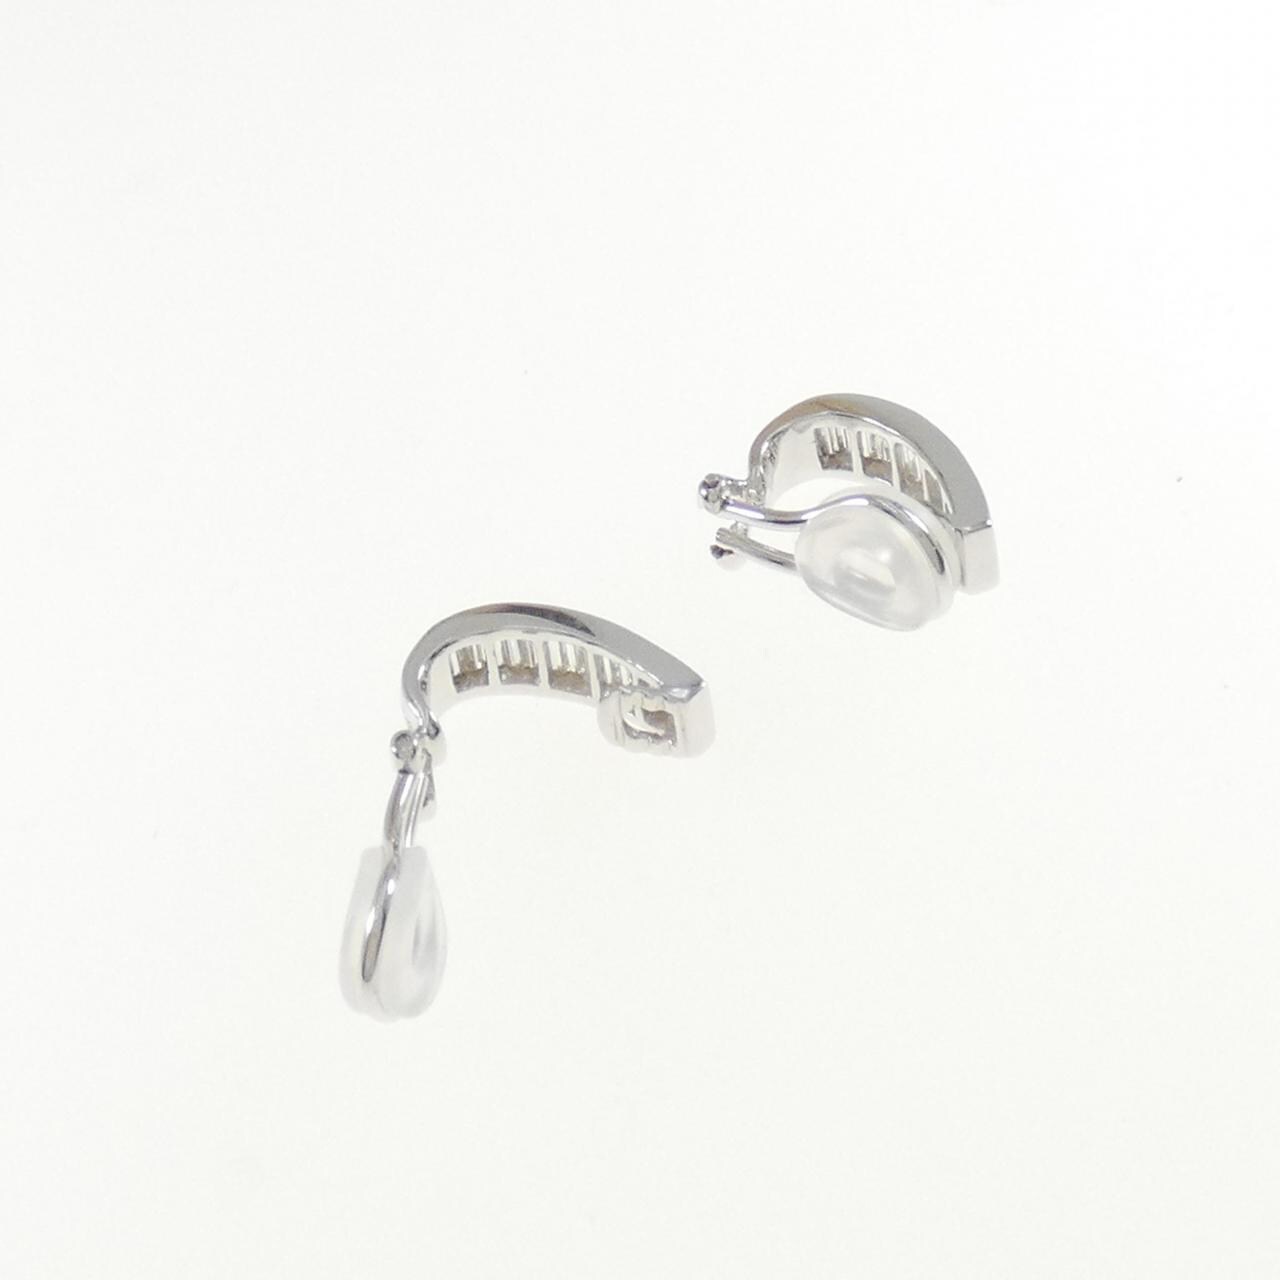 K18WG Diamond earrings 1.26CT